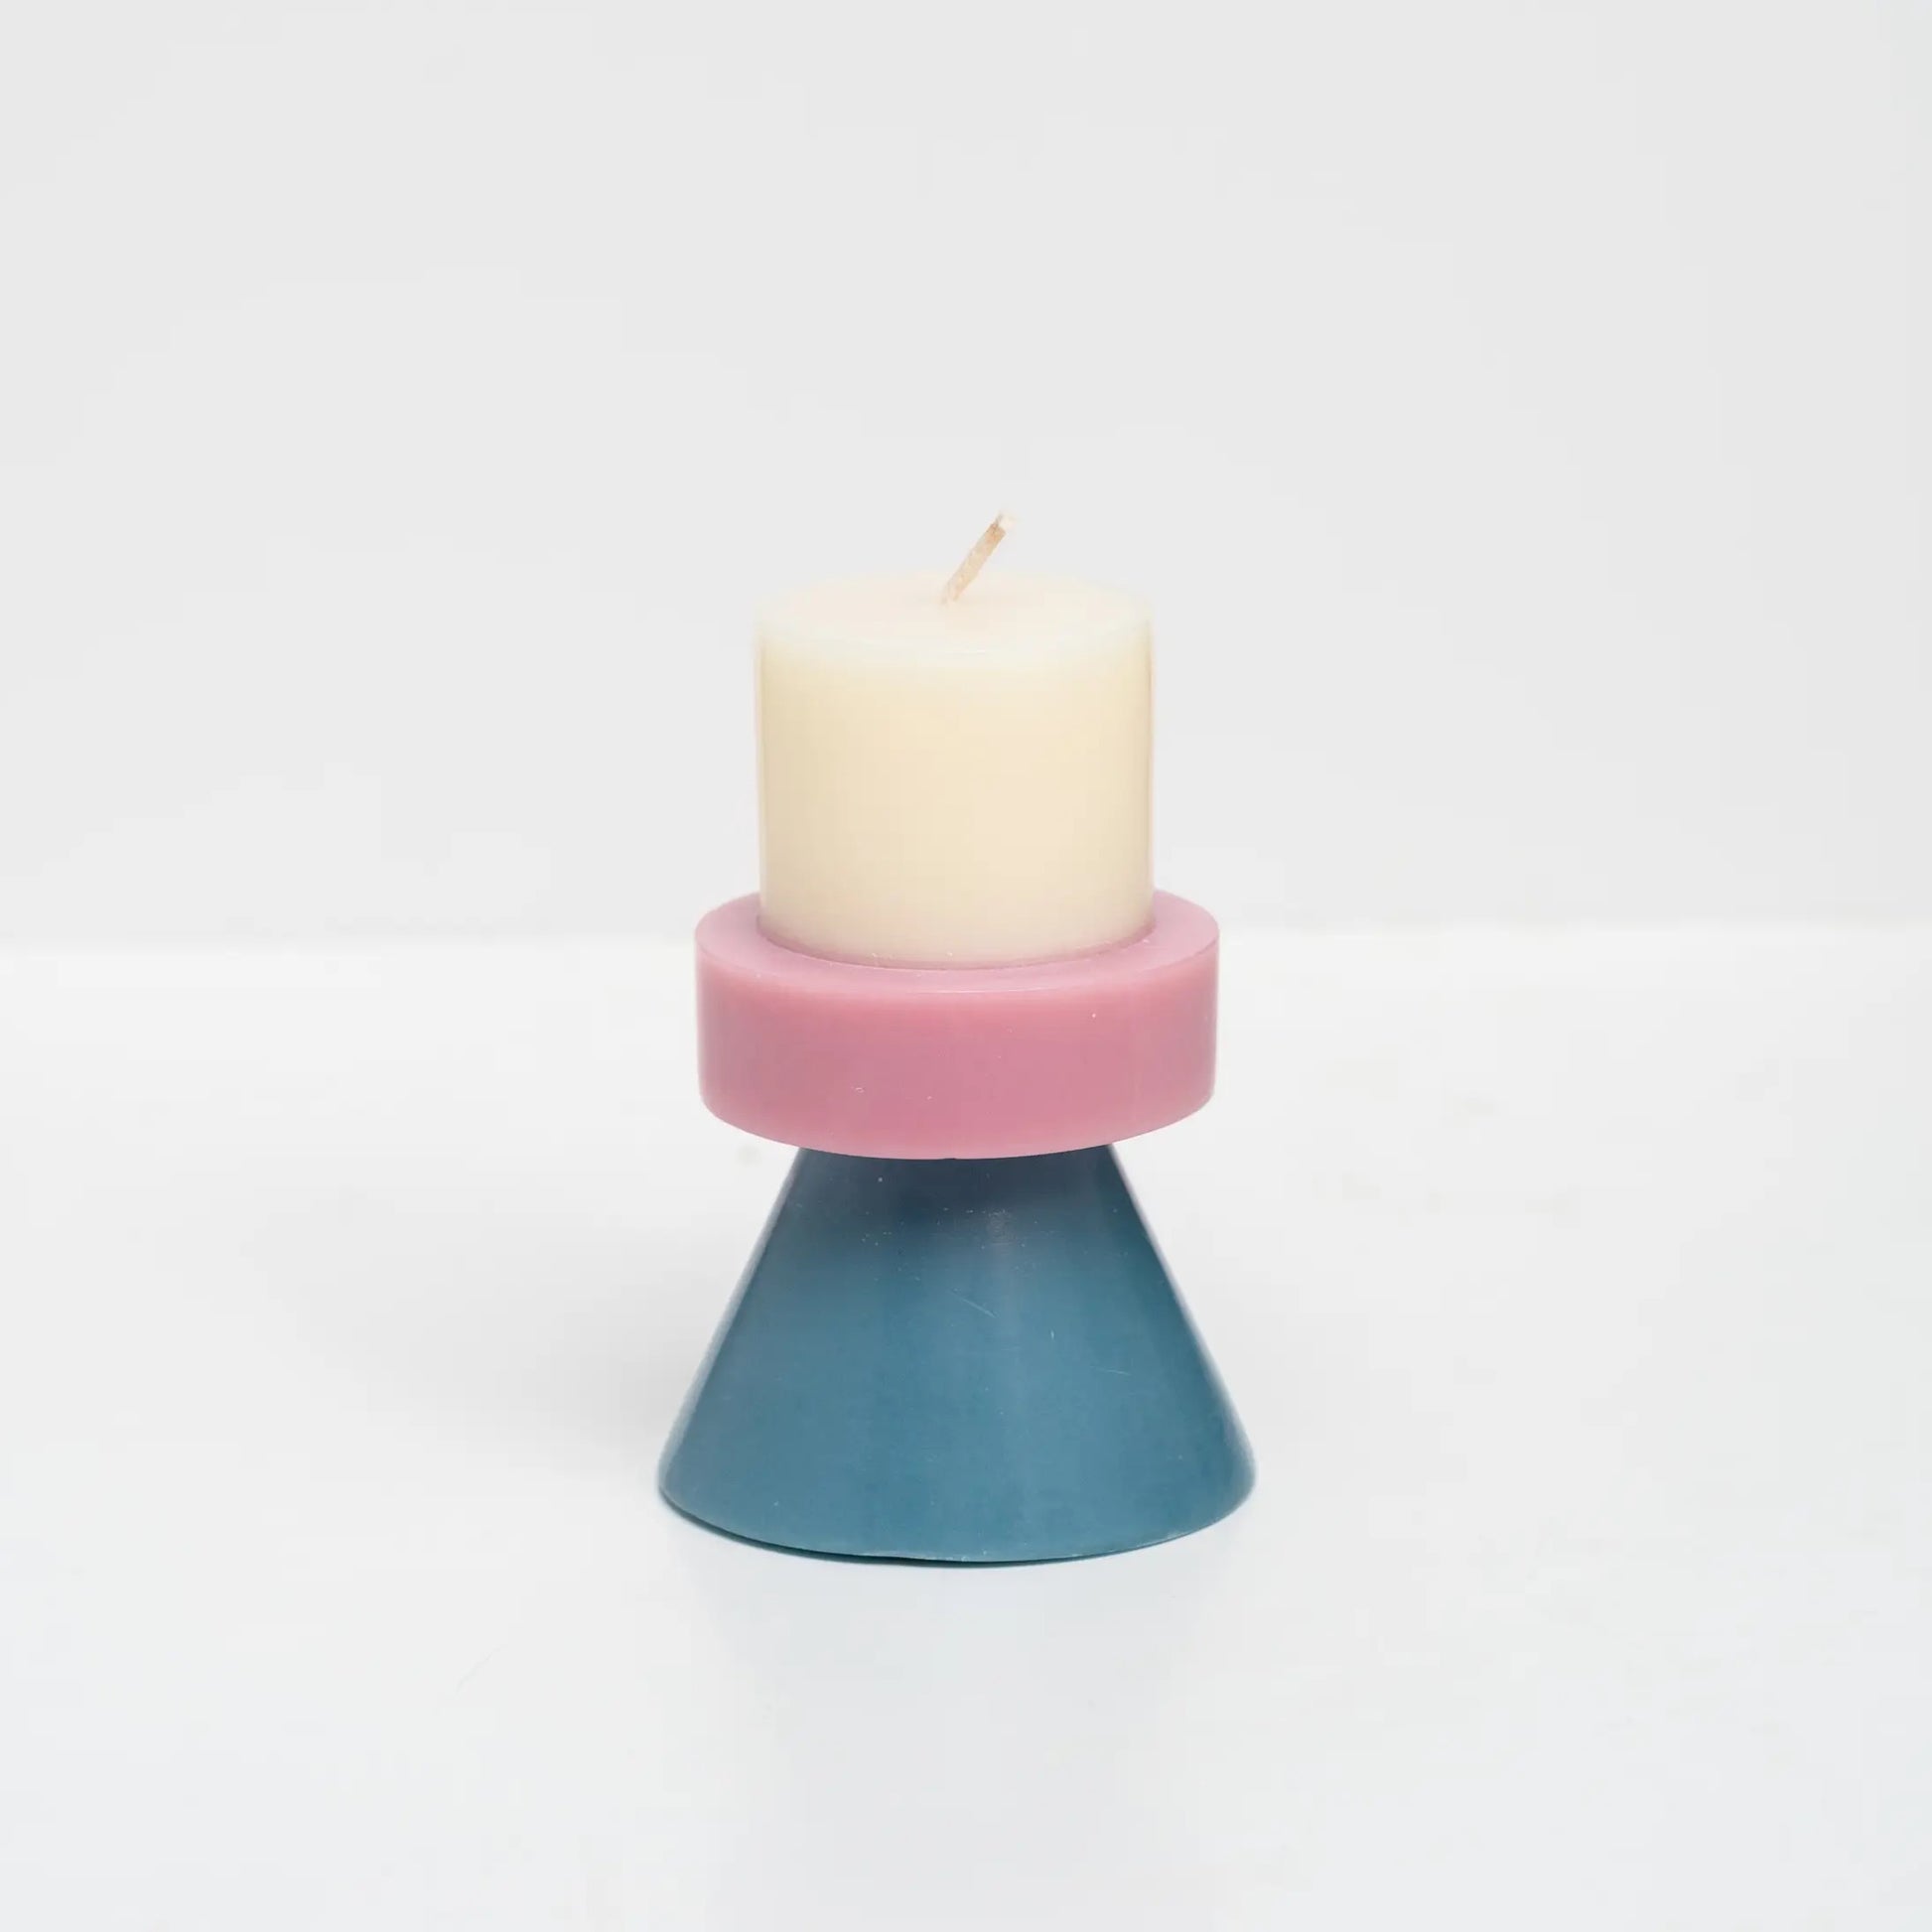  Yod + Co. Mini Stack Candle - Ivory / Lavender / Blue Grey